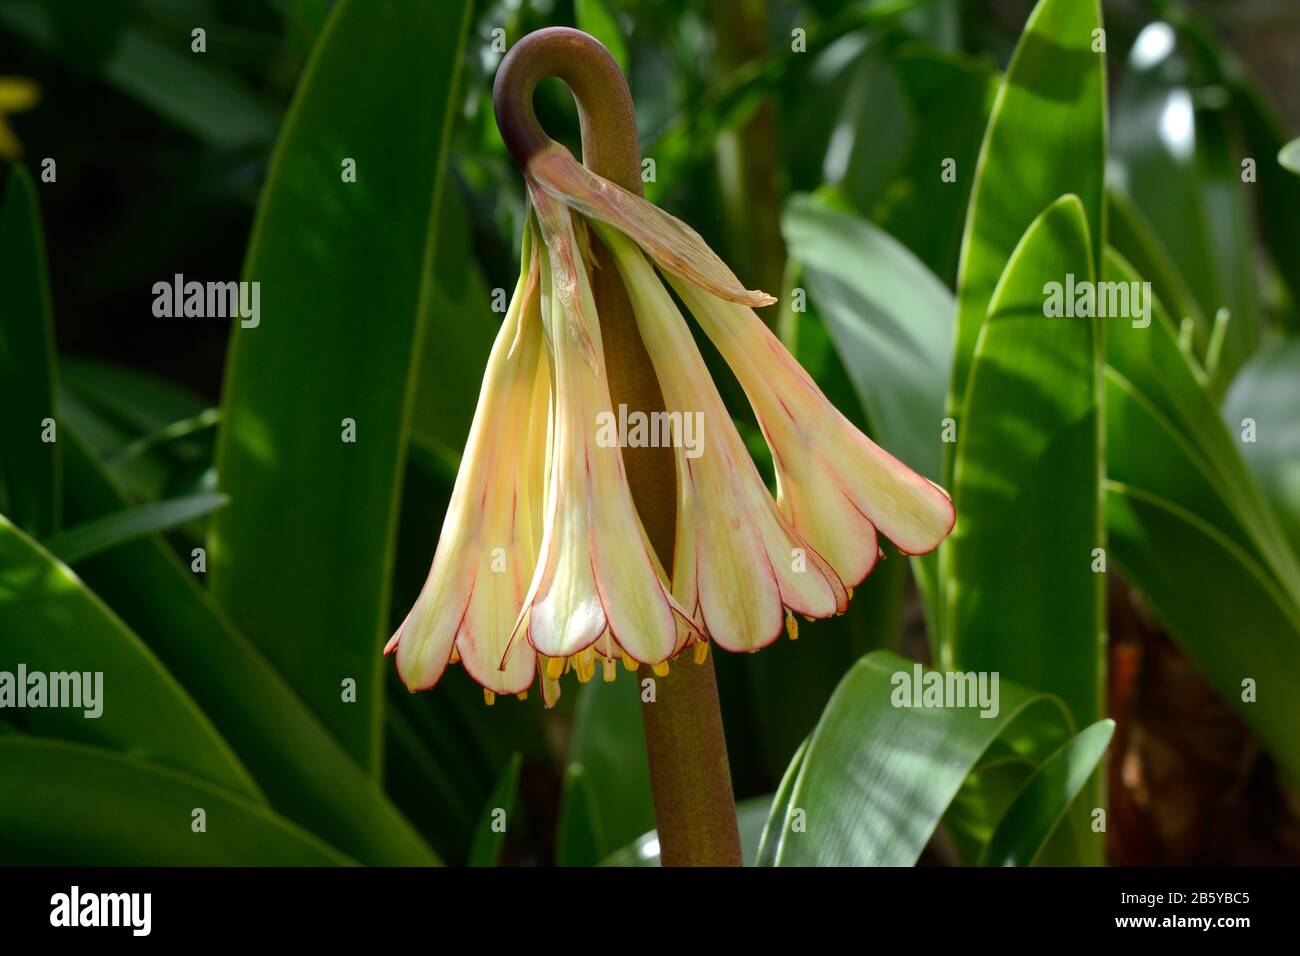 Cyrtanthus falatus falcate lily flower close up Stock Photo